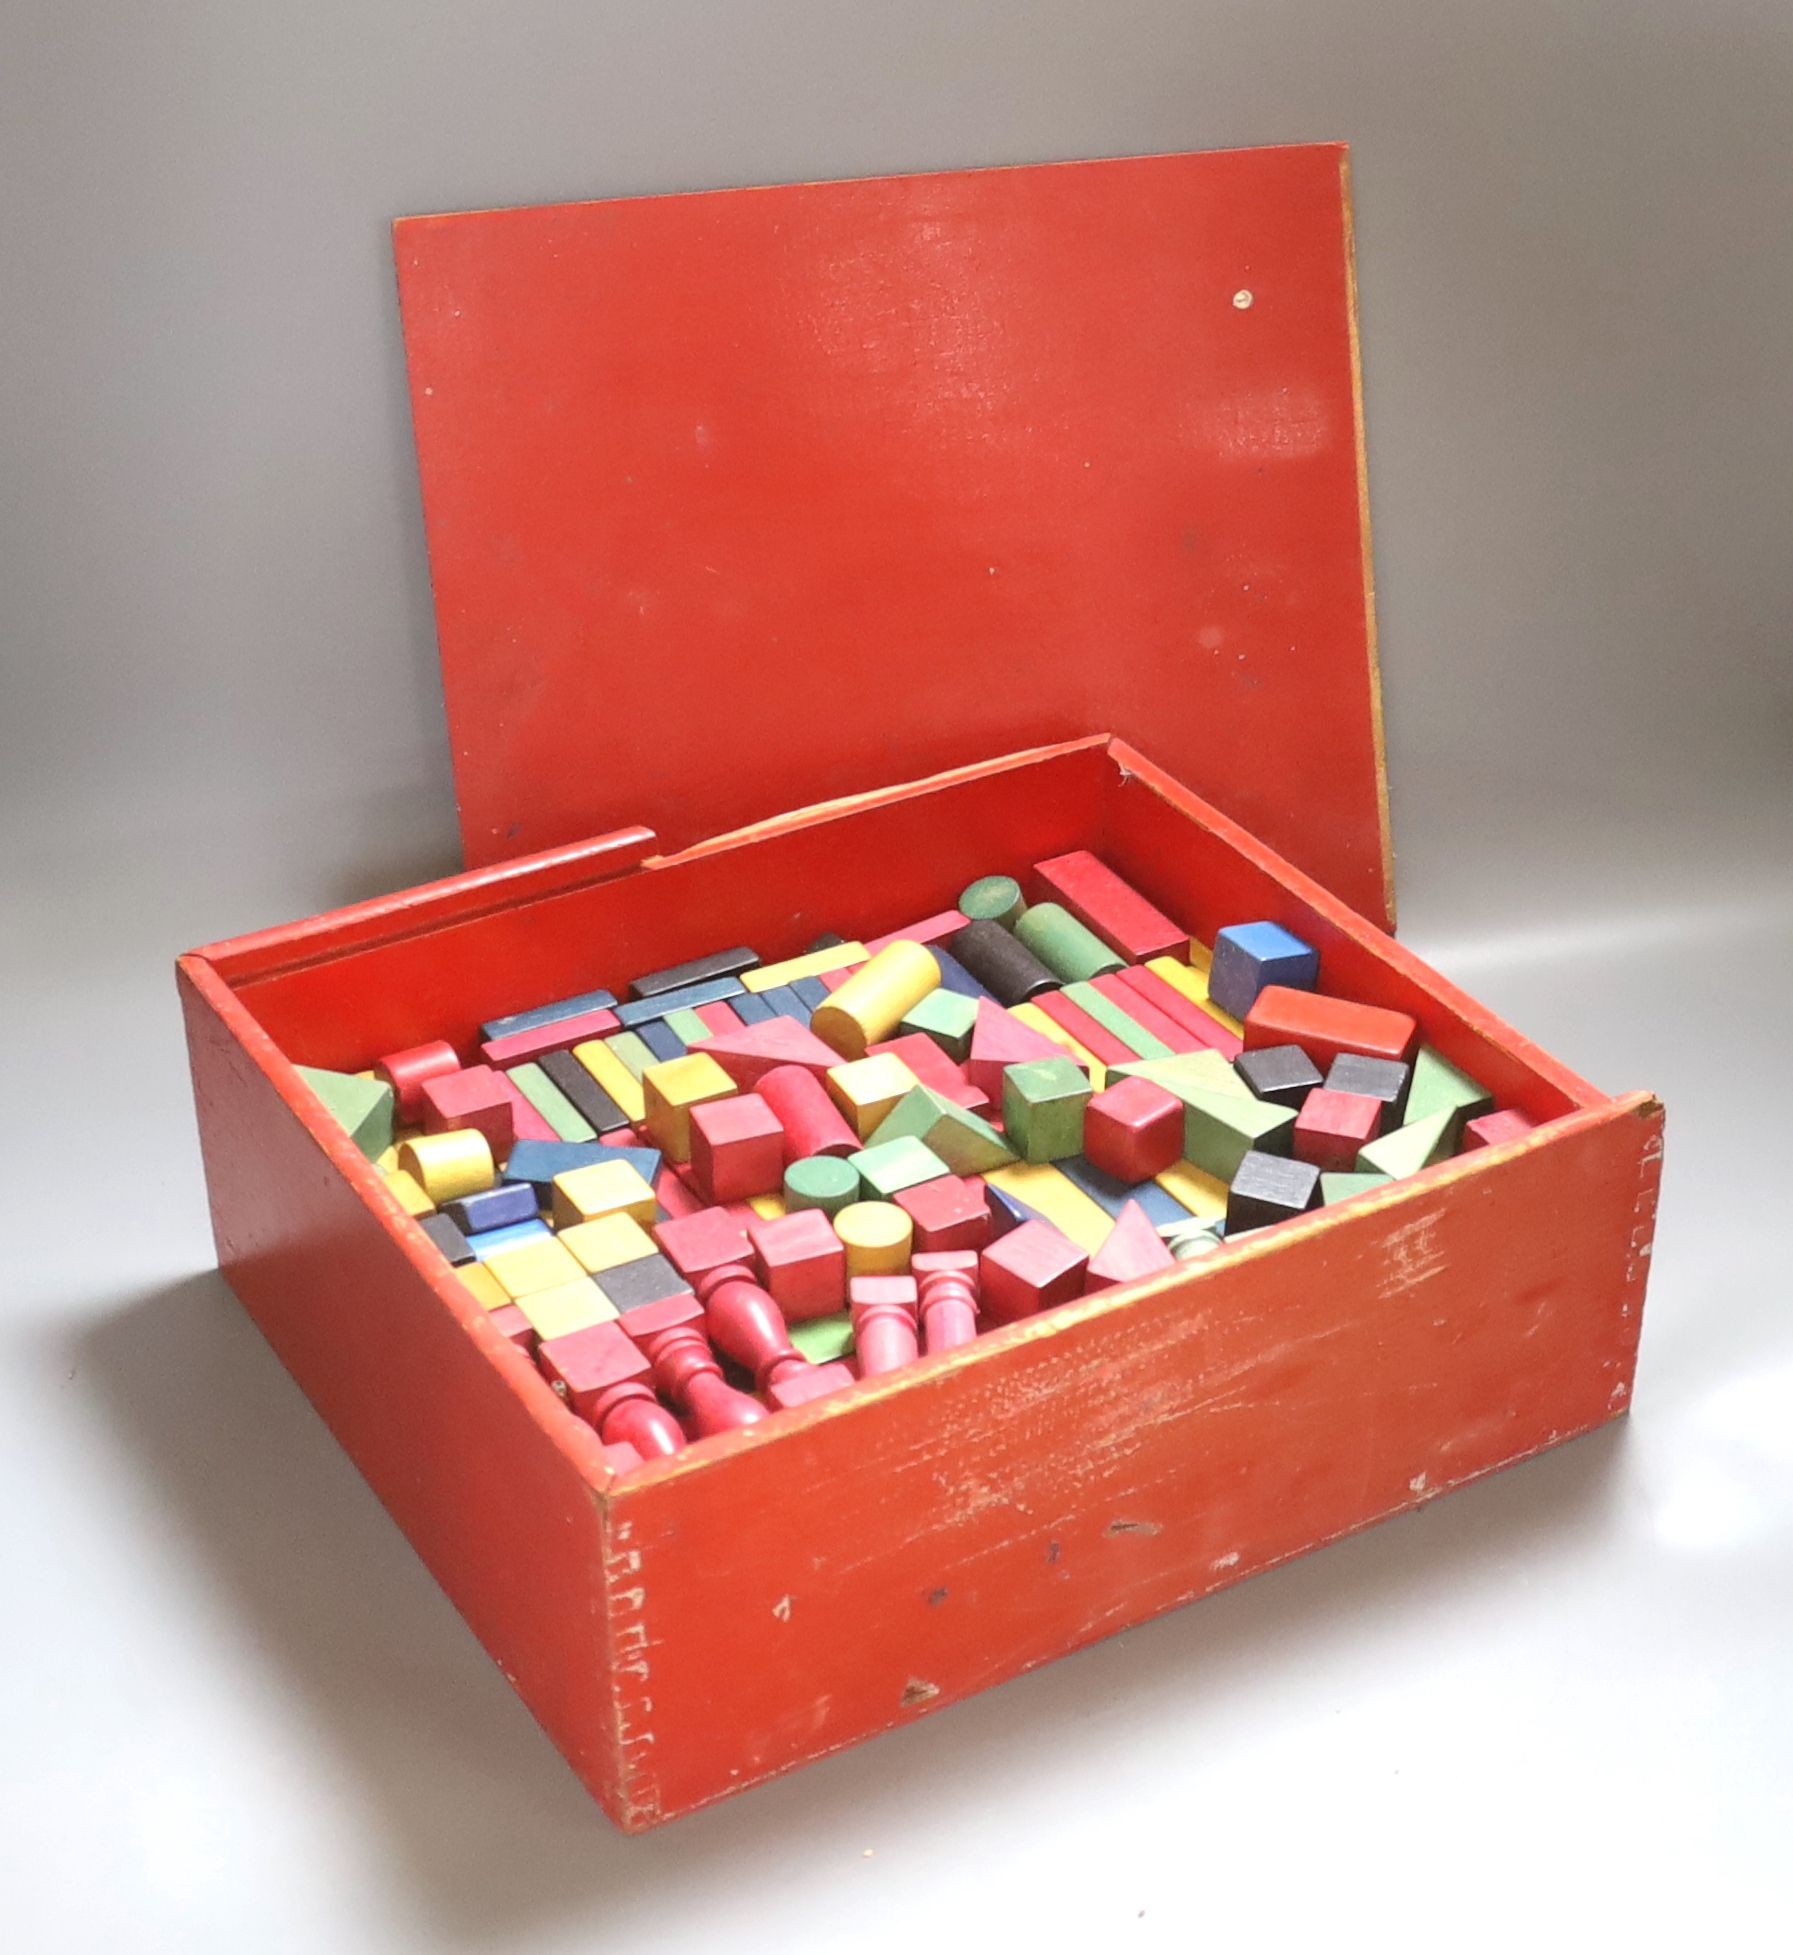 A boxed building brick set